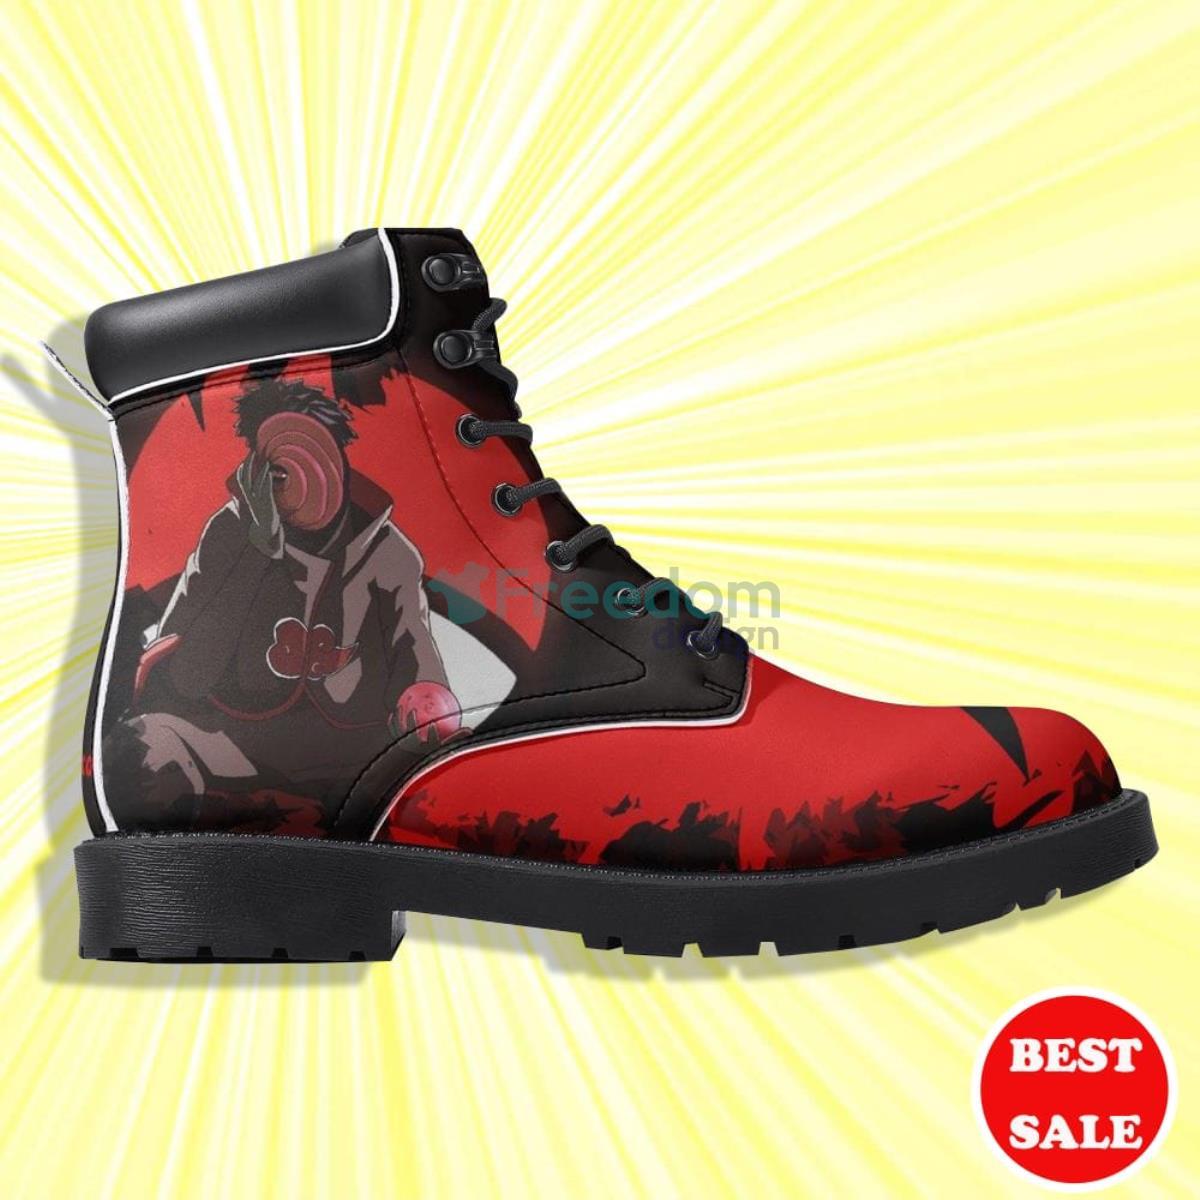 Naruto Shippuden Obito Anime Leather Boots Product Photo 2